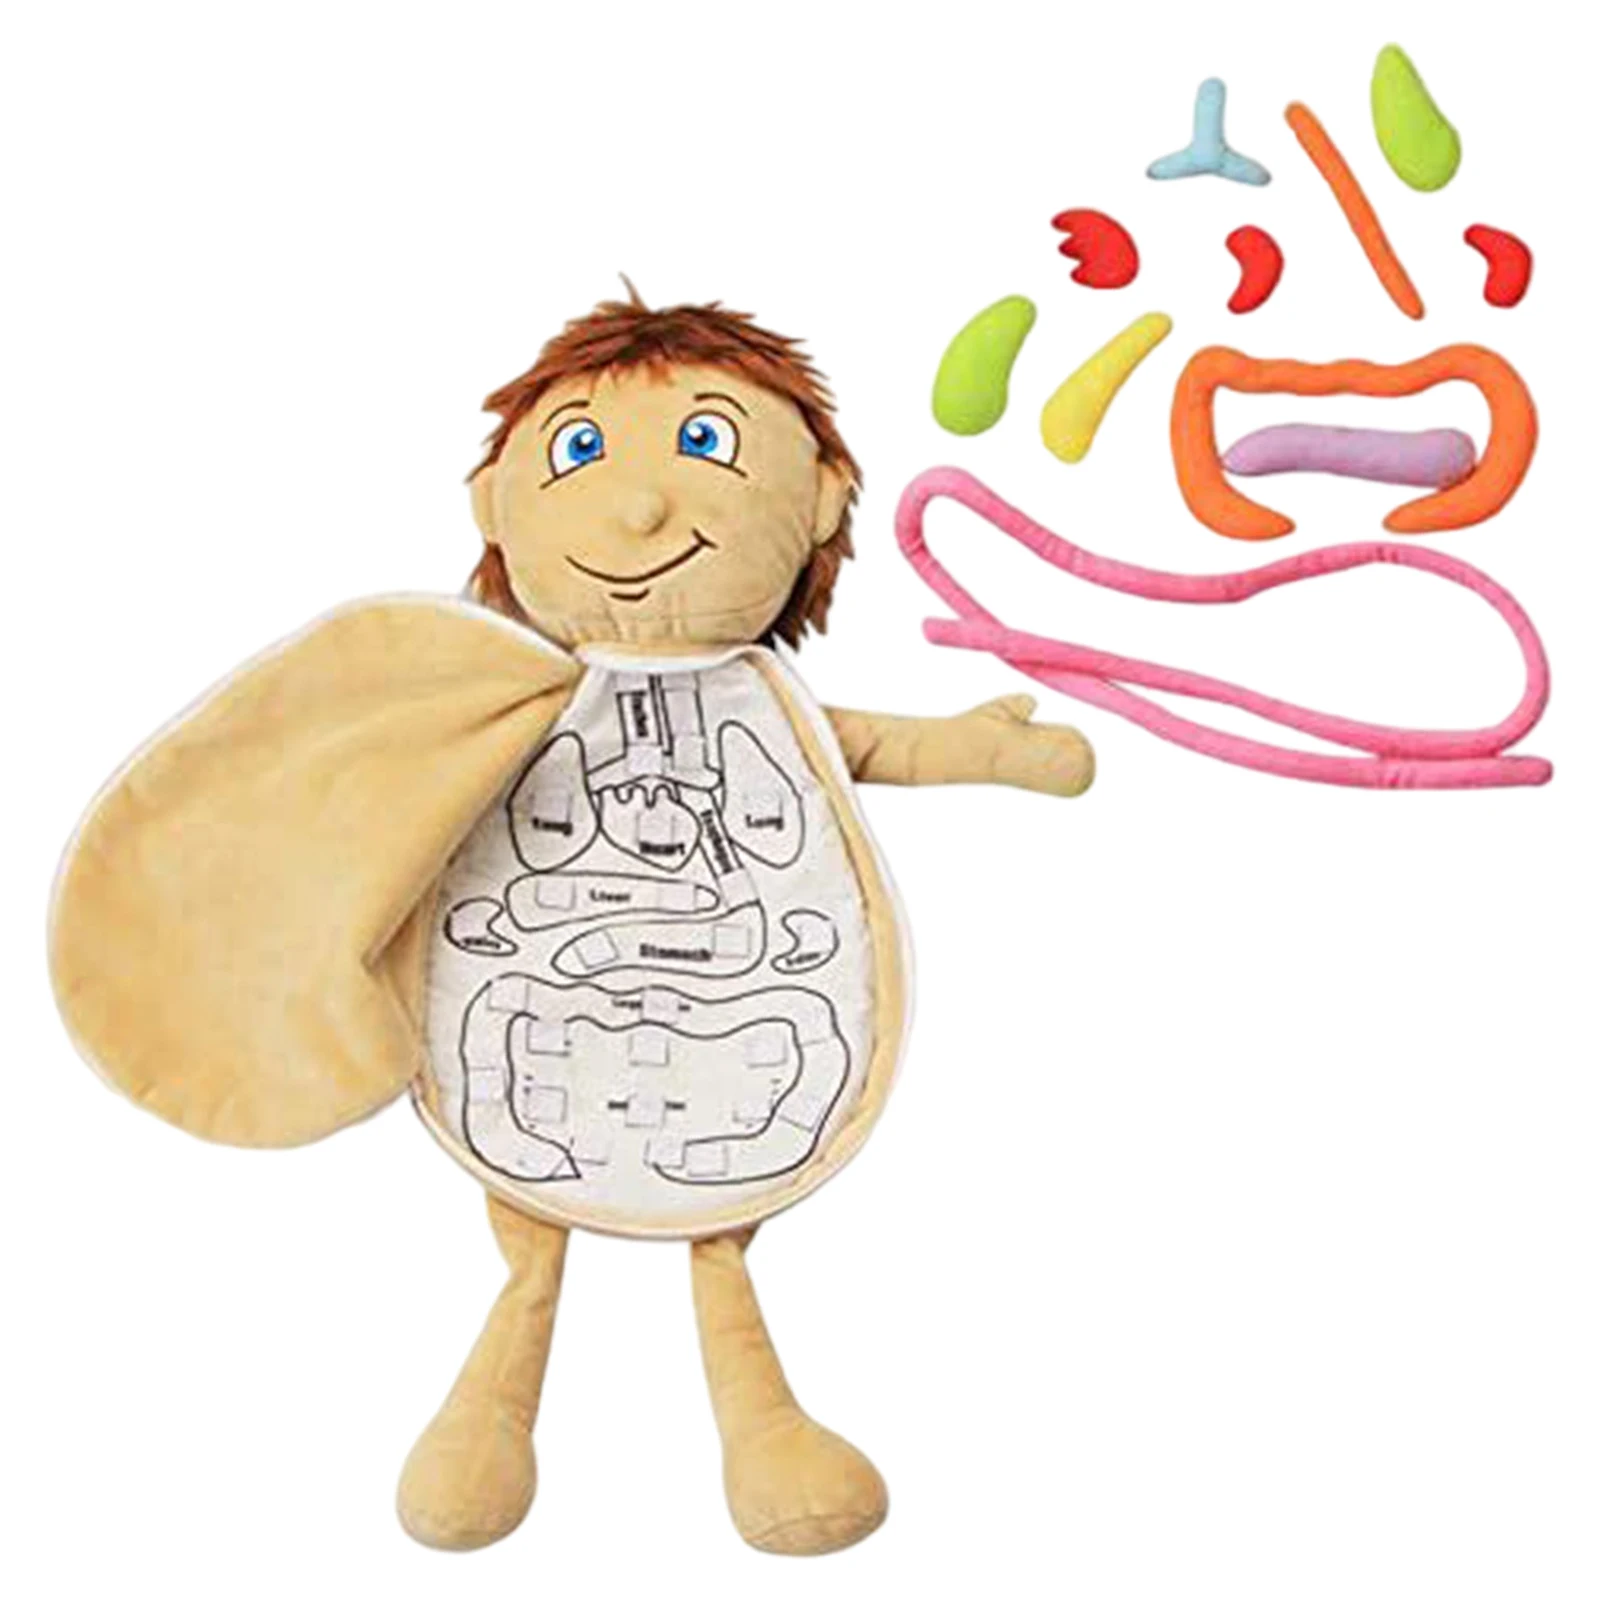 Human Body Anatomy Toy Medical Education Display Kids Anatomy Toys Plush Toys for School